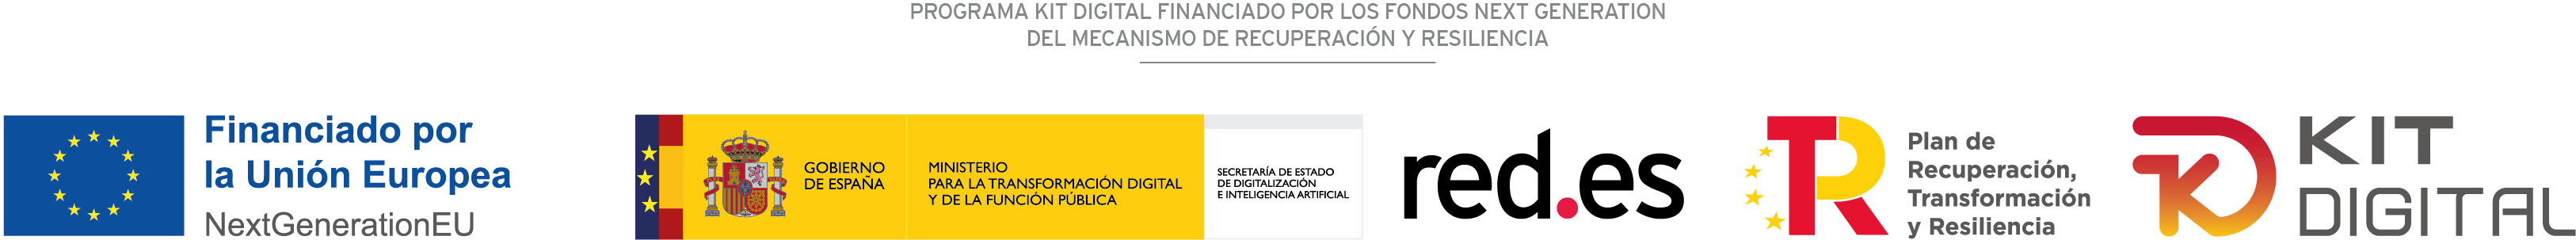 Logos Kit Digital - Gobierno de España, red.es, NextGenerationEU